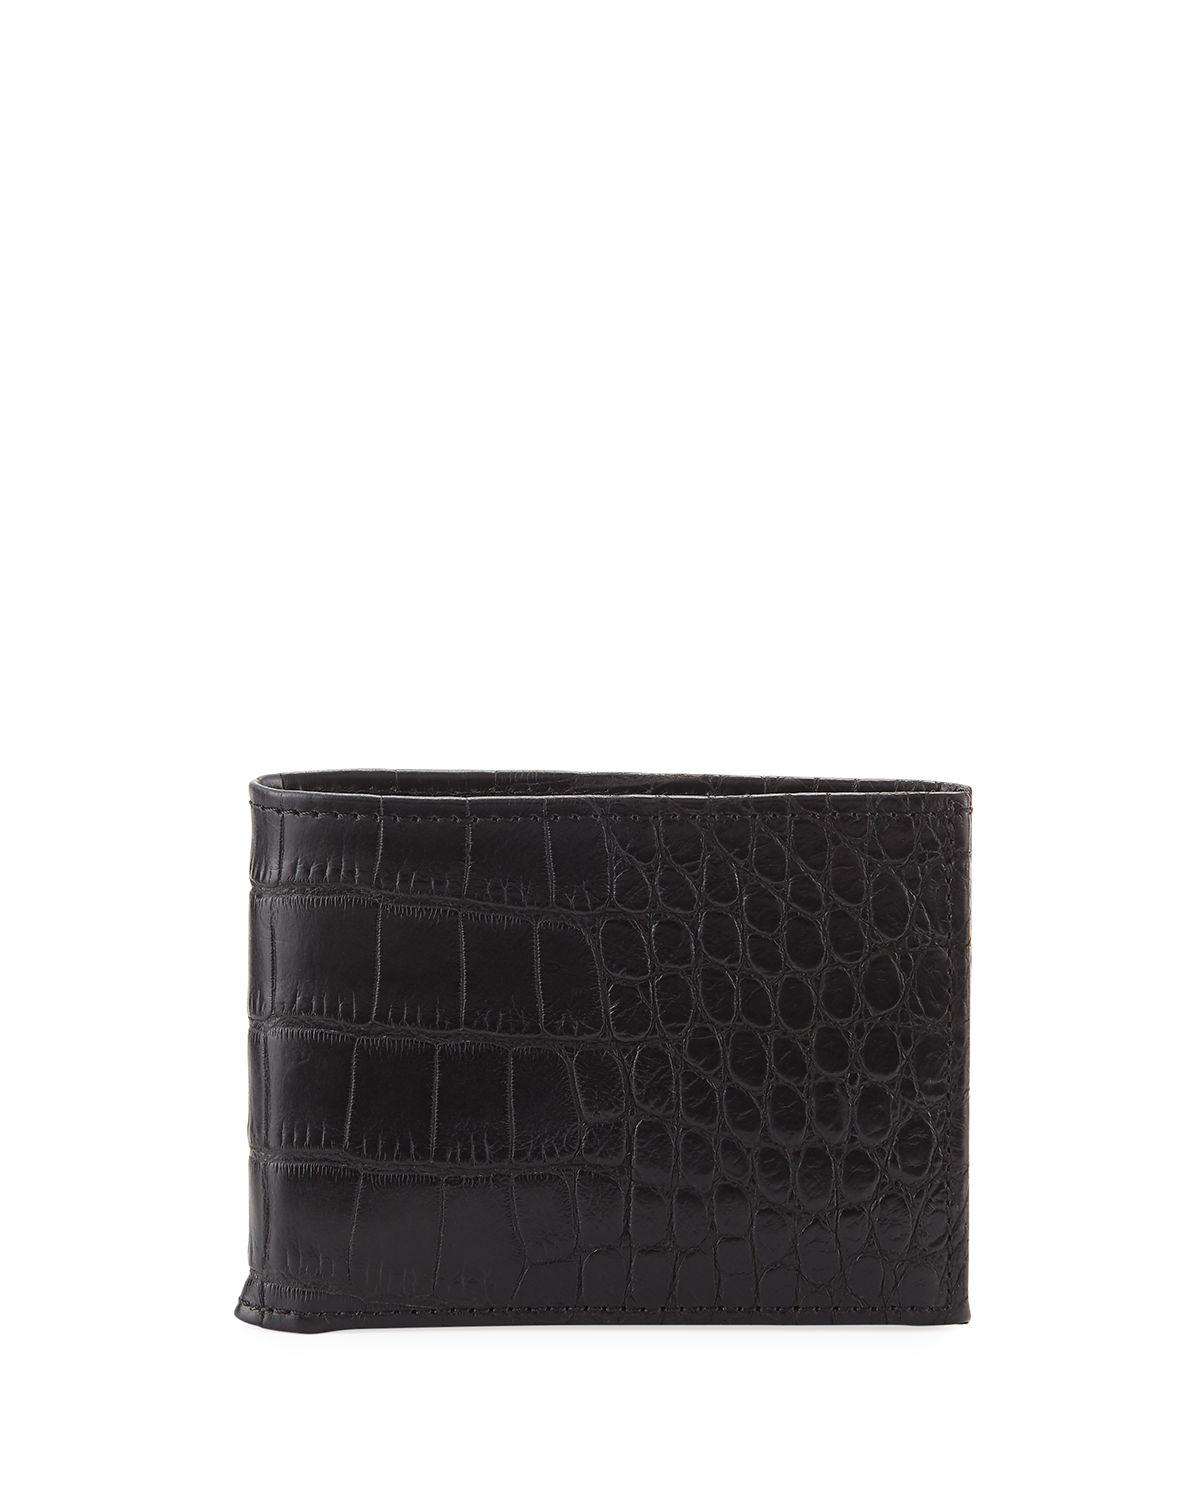 Lyst - Neiman Marcus Slim Bi-fold Wallet in Black for Men